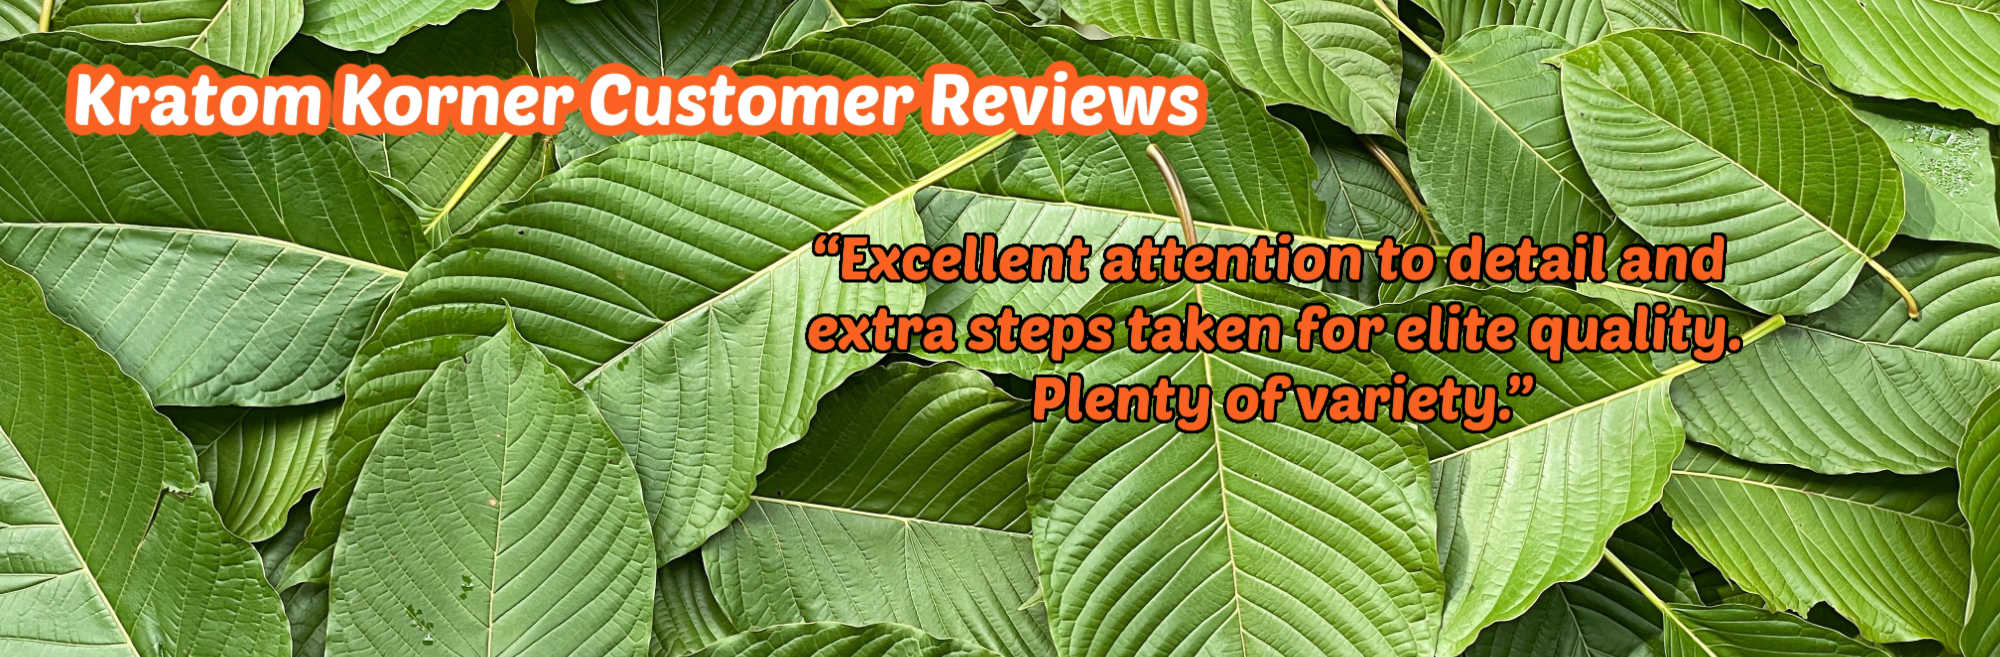 image of kratom korner customer reviews